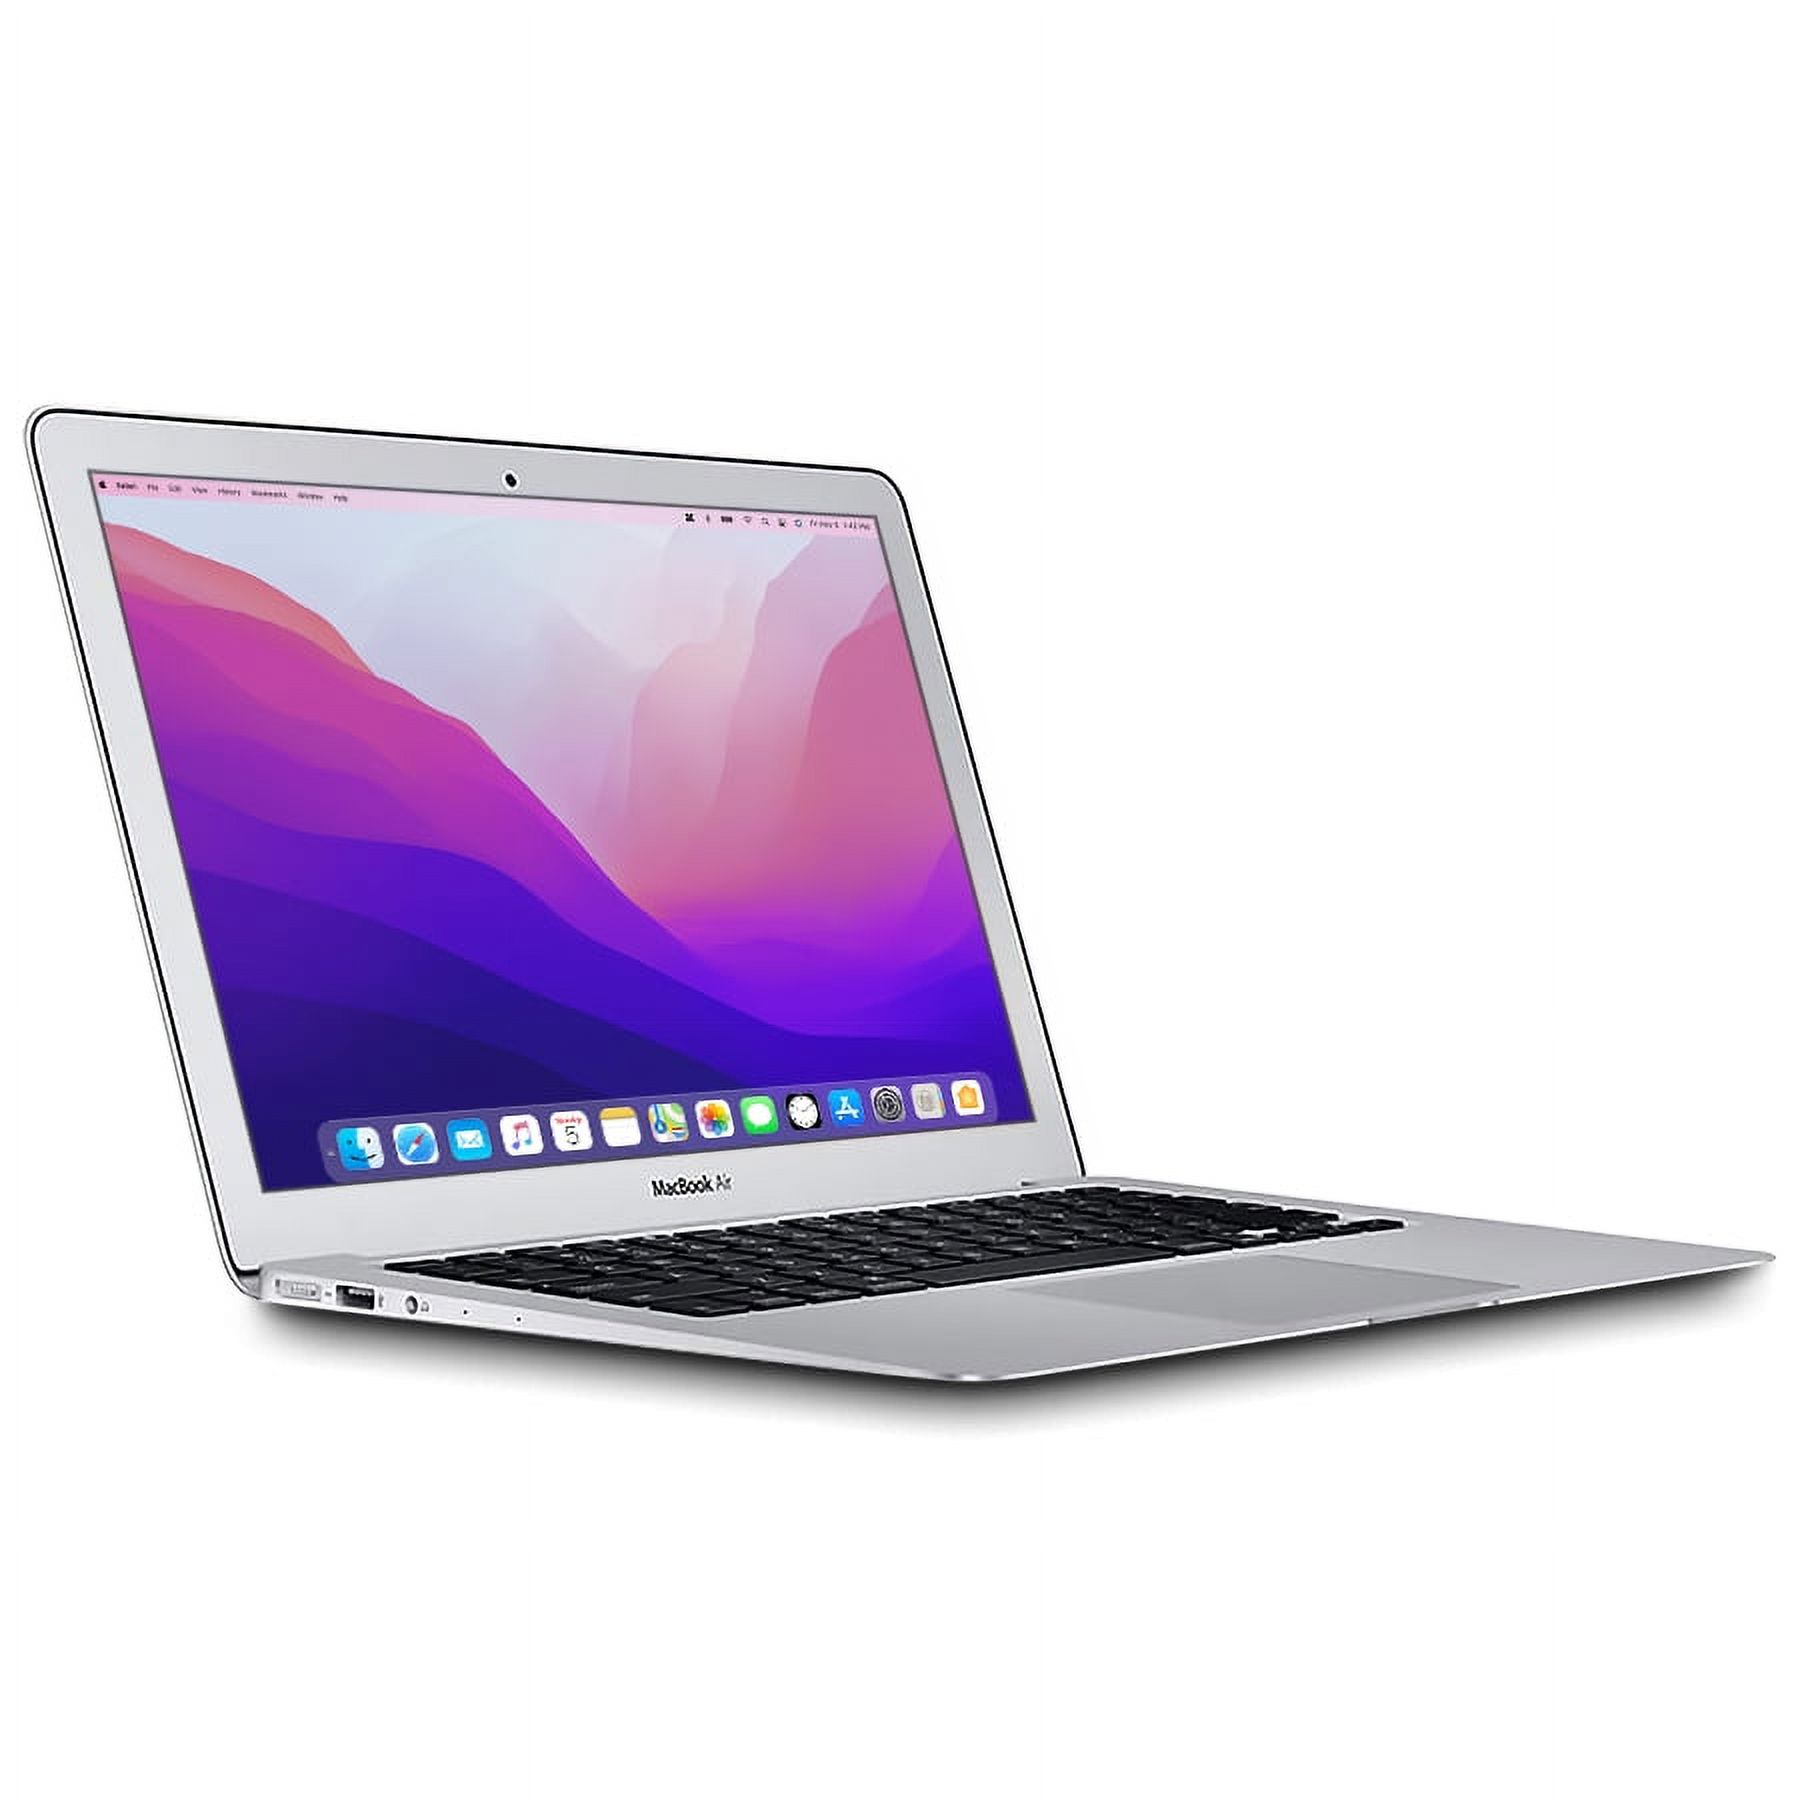 Restored Apple MacBook Air, 13.3" Laptop, Intel Core i5, 8GB RAM, 256GB SSD, None, Mac OS X 10.10, Silver, MMGG2LL/A (Refurbished) - image 2 of 4